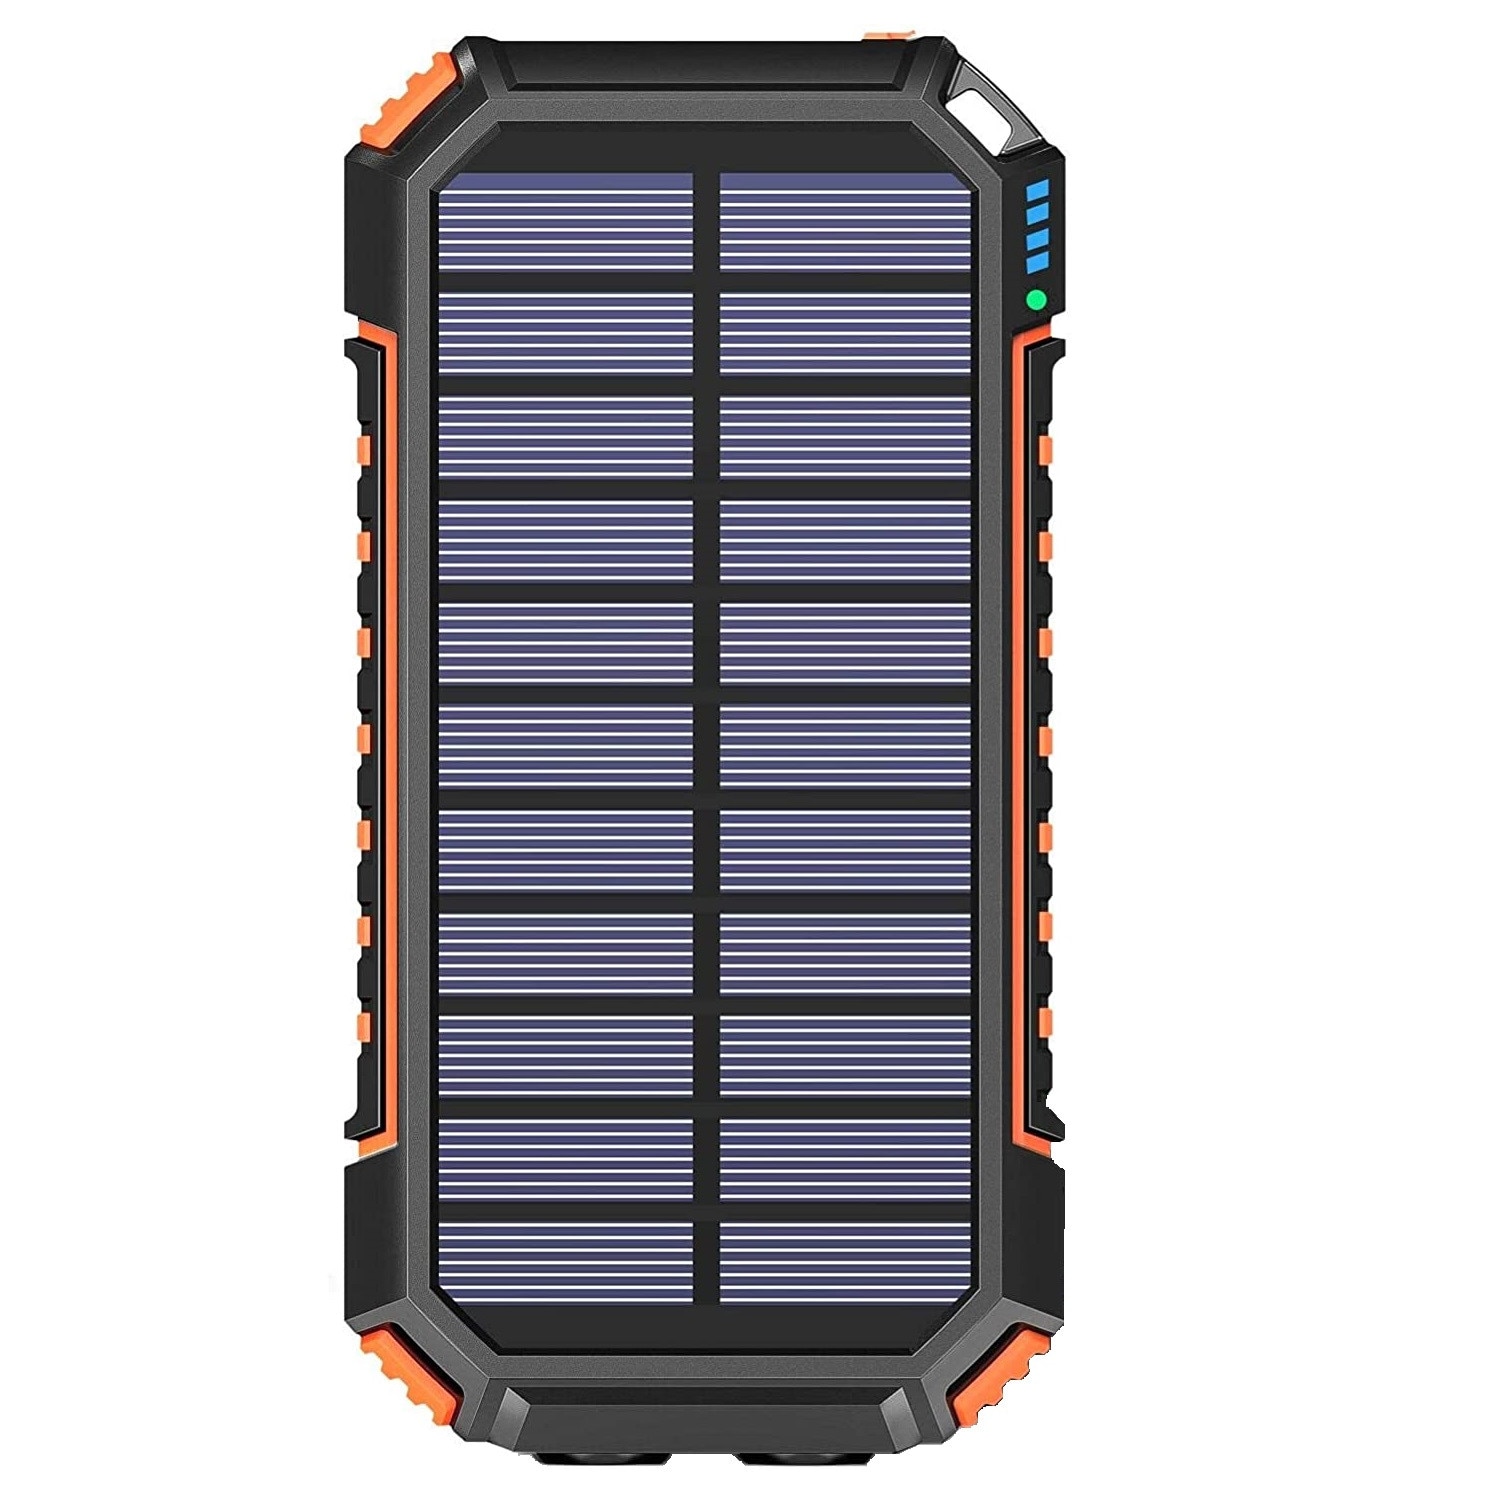 Acumulator extern 26800 mAh, powerbank solar cu incarcare wireless QI, 2  USB si 1 USB C, rezistent la apa, cu lanterna LED 